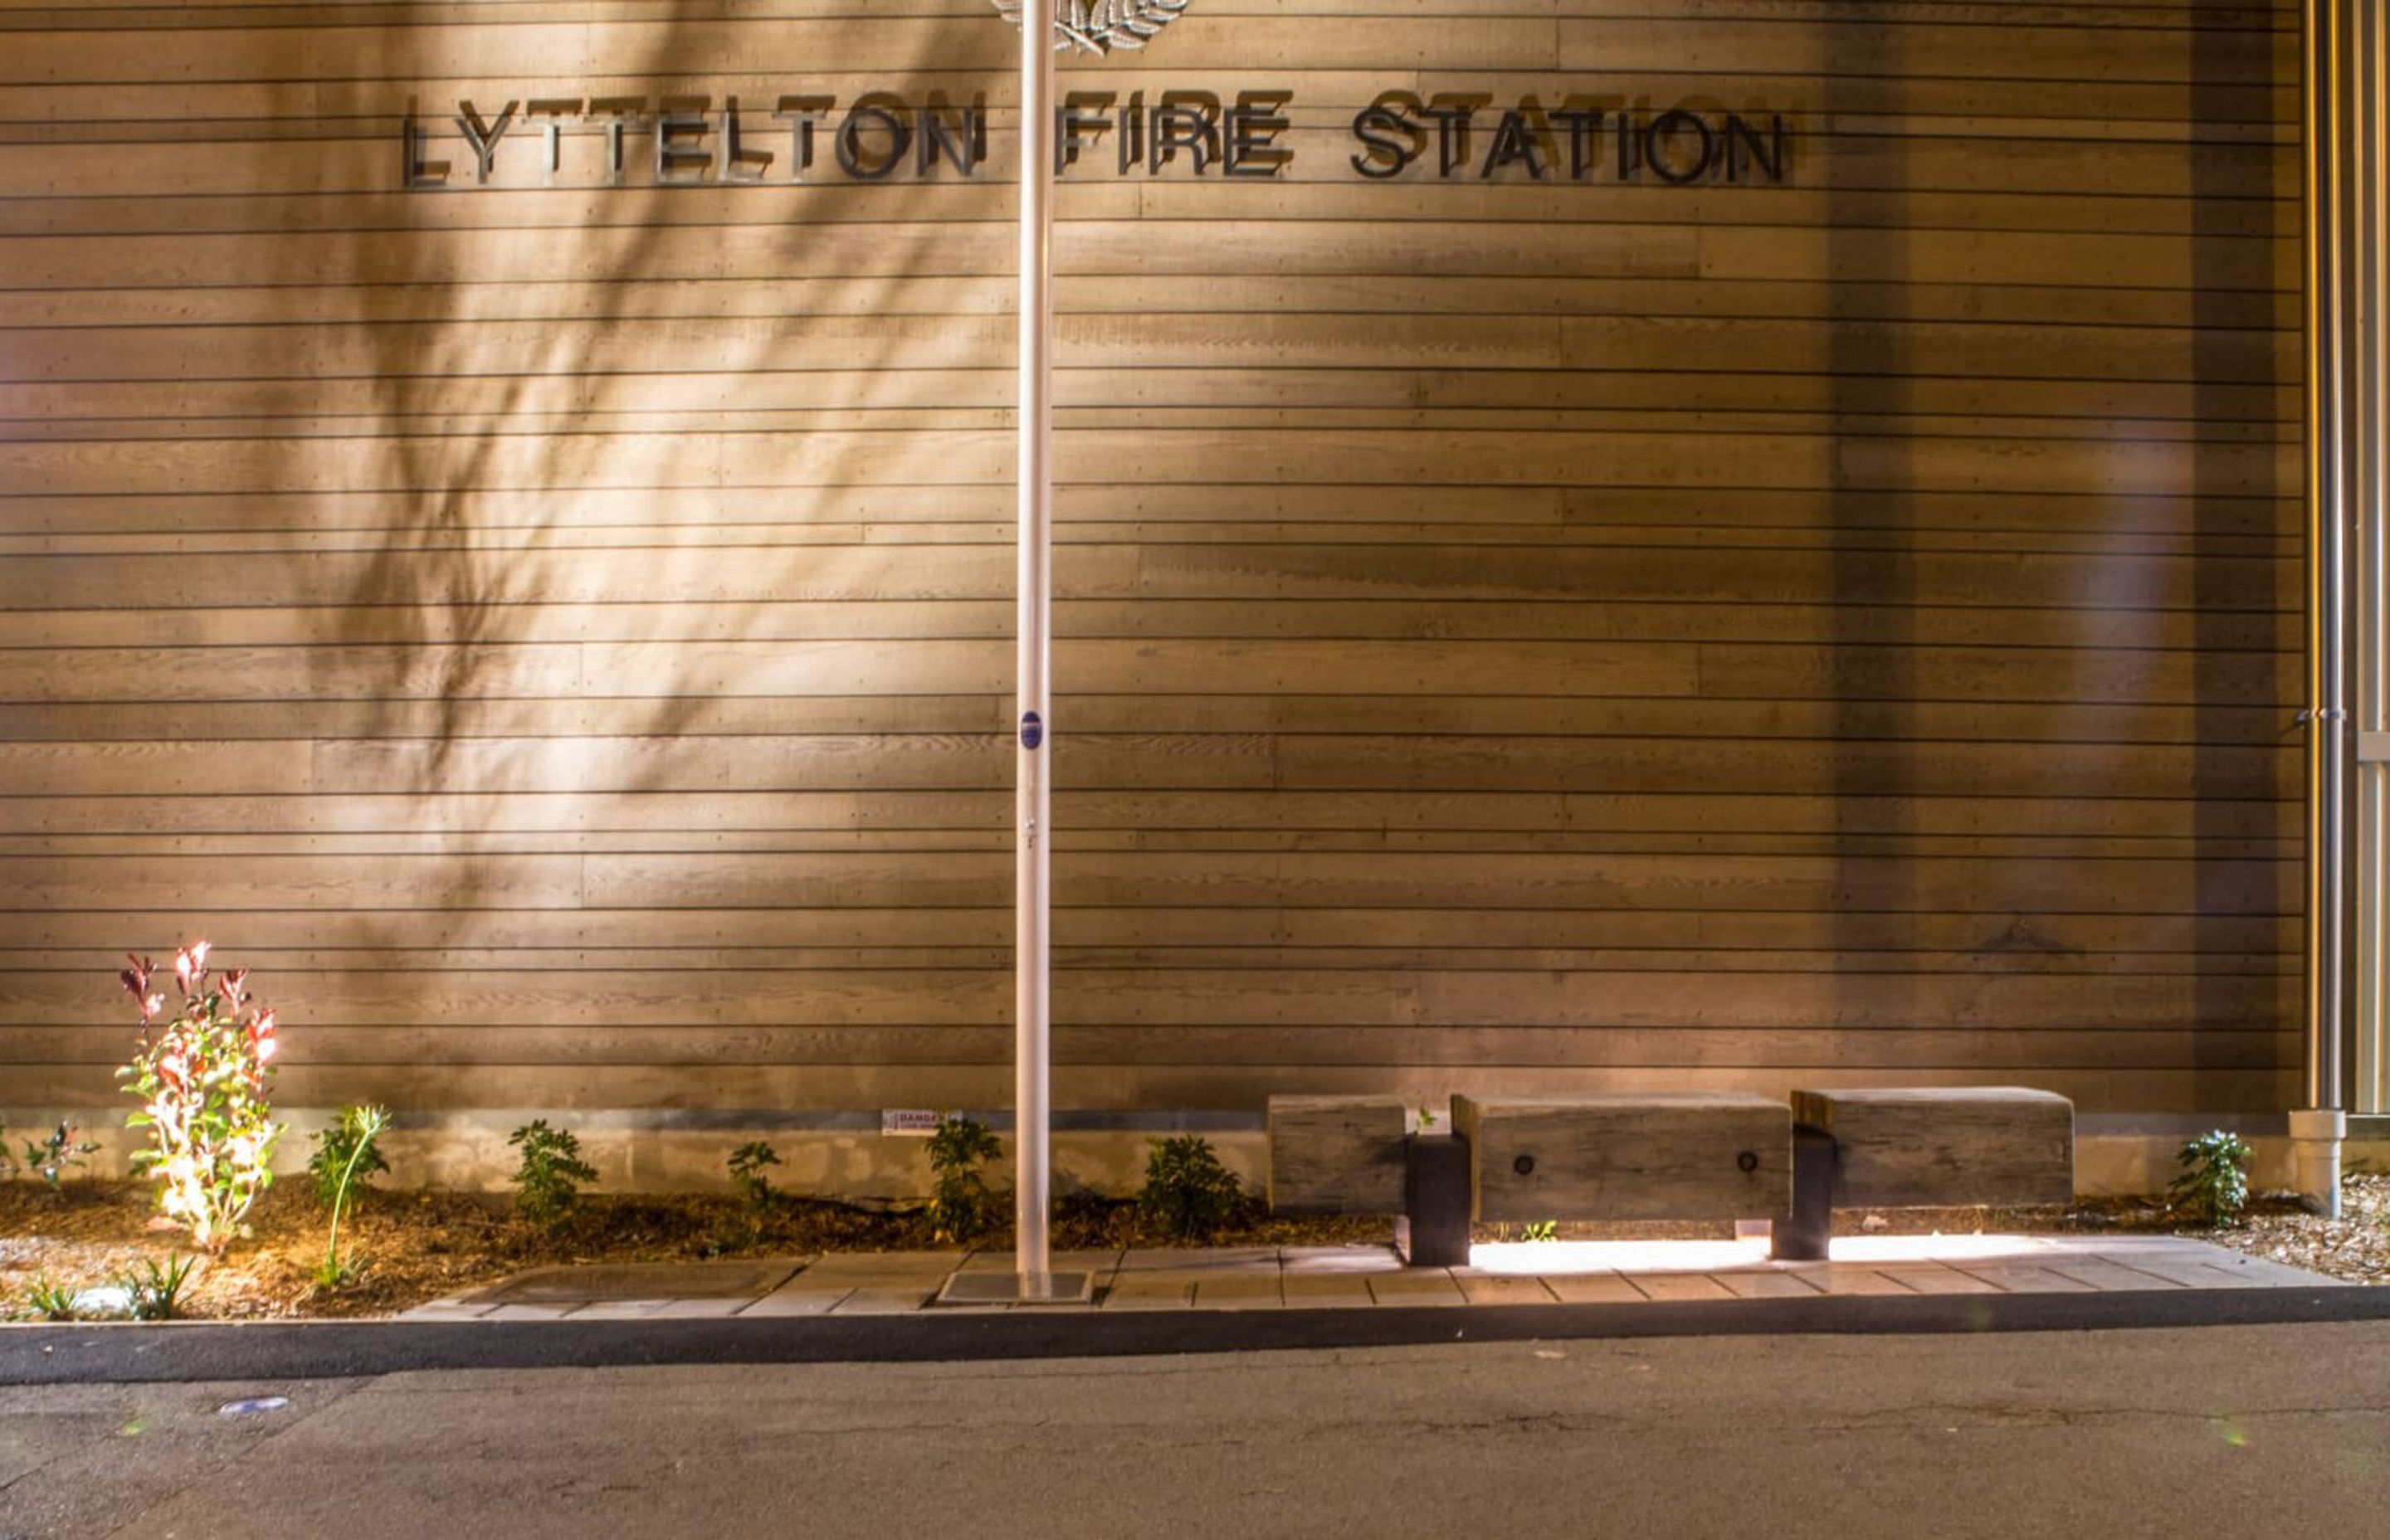 Lyttelton Fire Station